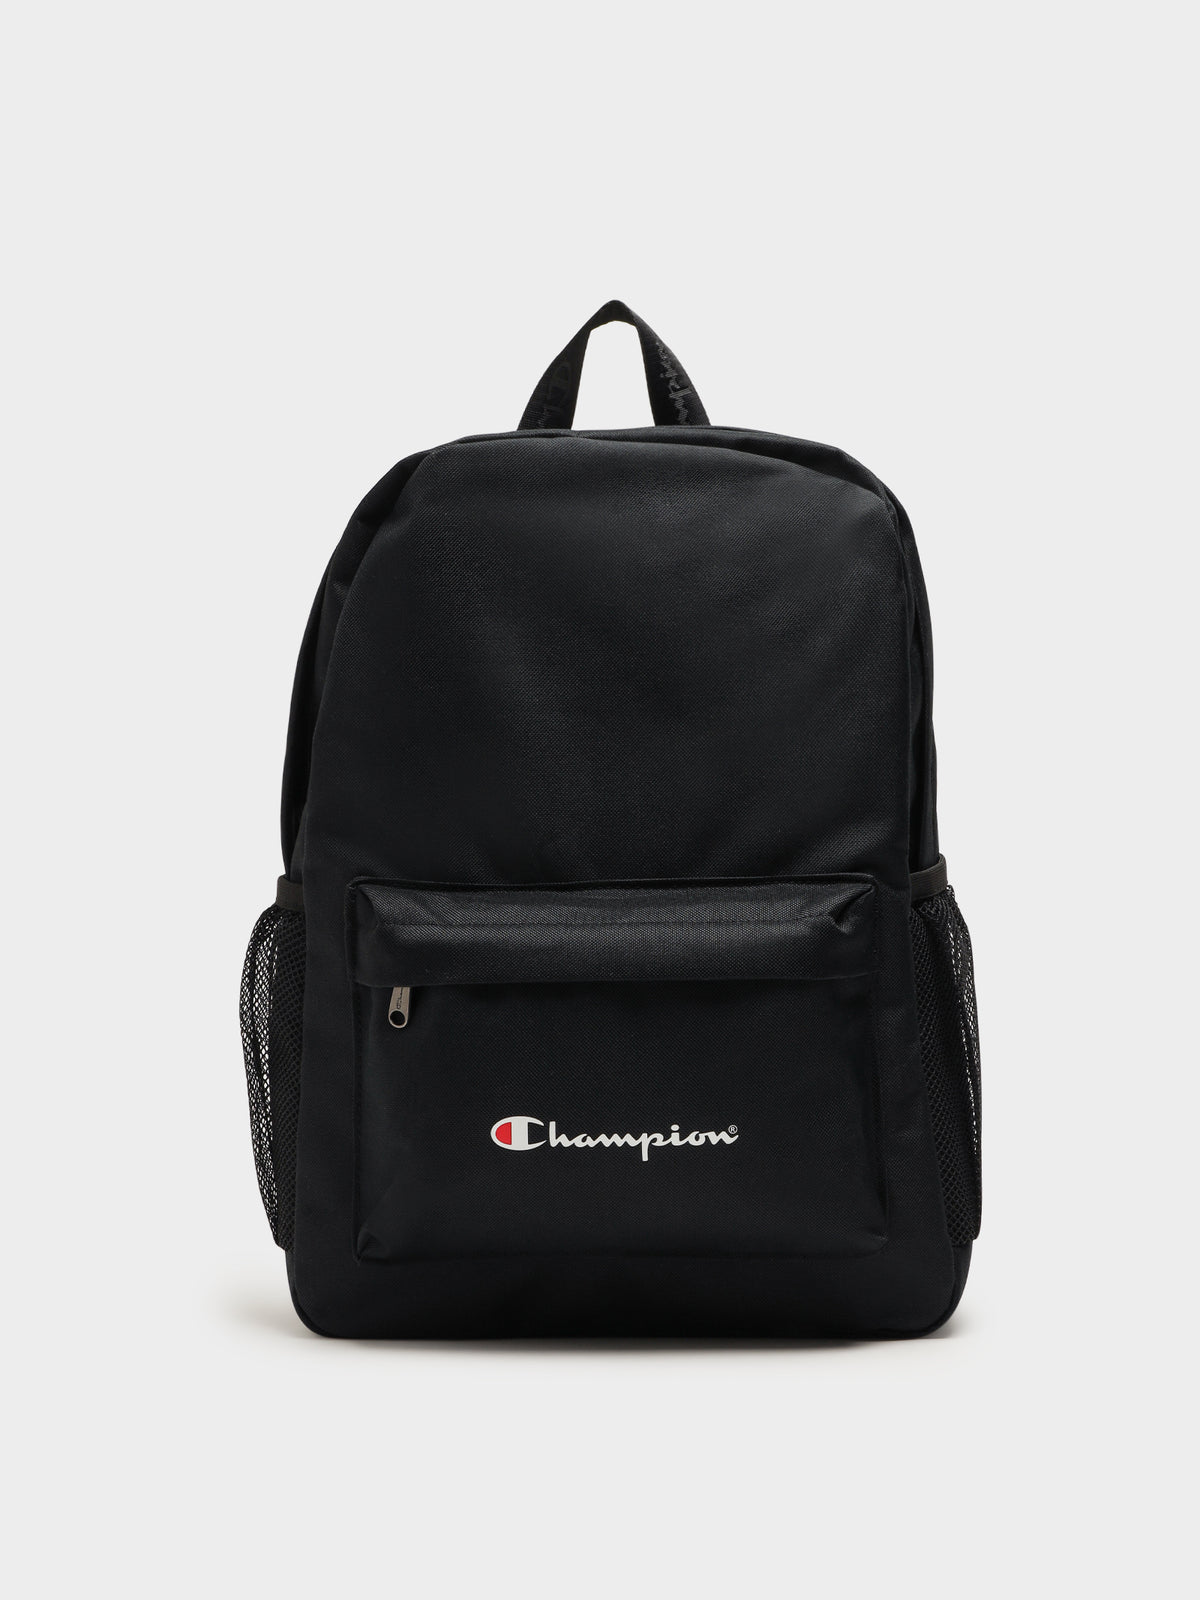 Champion Medium Backpack in Black